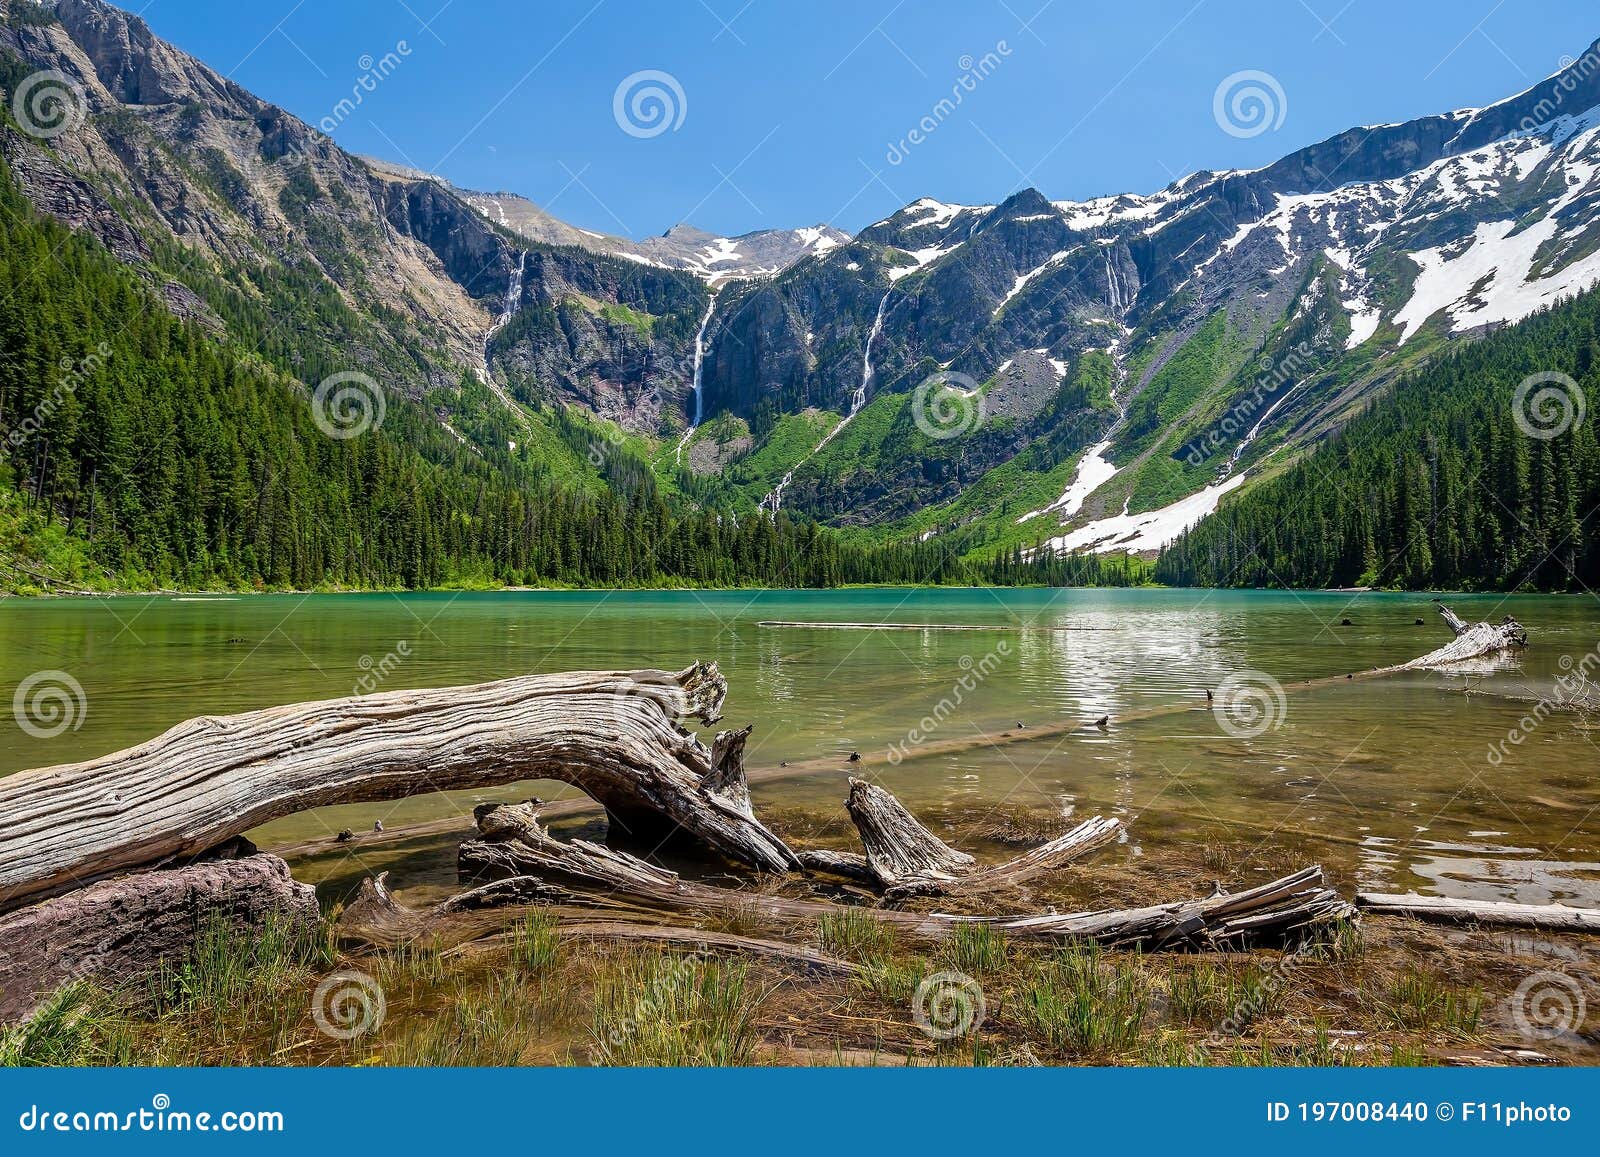 scenic mountain views, avalanche lake, glacier national park montana